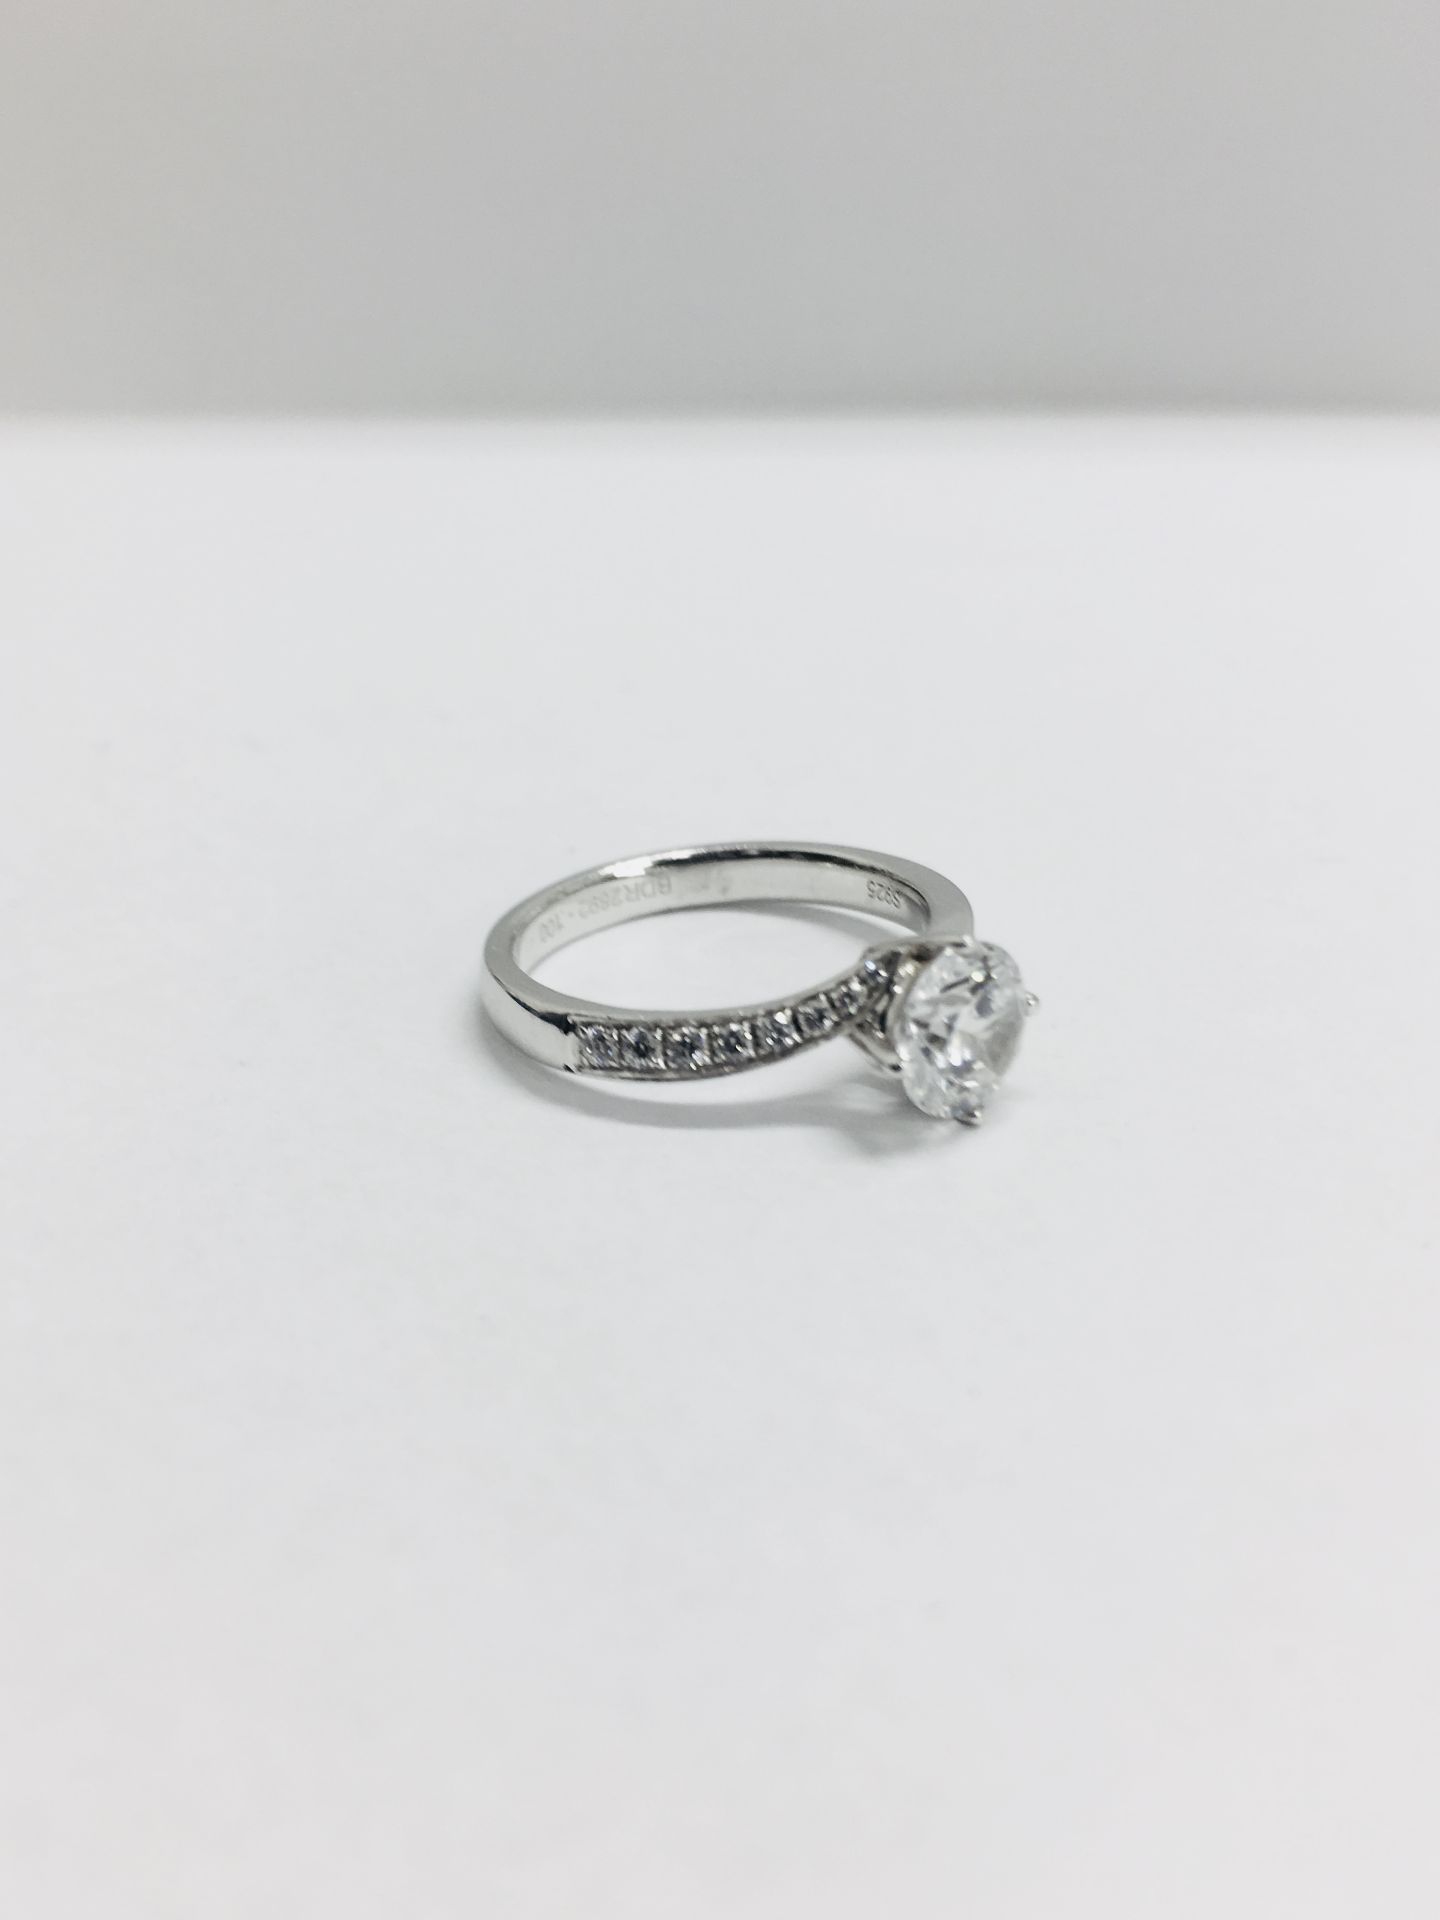 Platinum diamond solitaire ring ,0.50ct vs clarity i colour natural brilliant cut diamond(clarity - Image 3 of 6